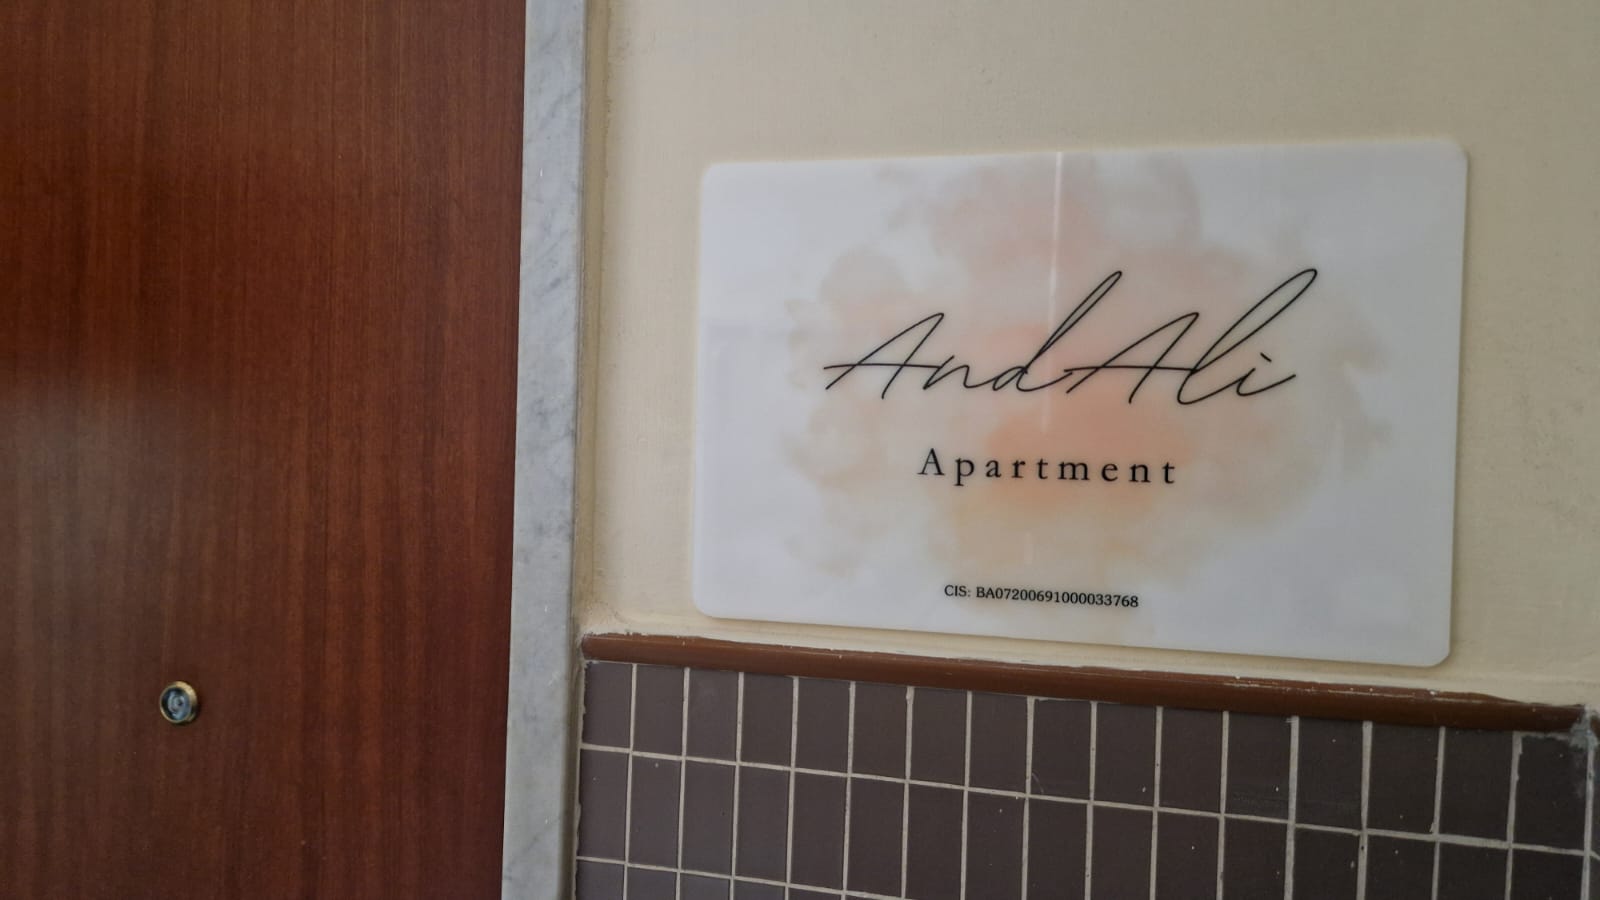 Andalì Apartment